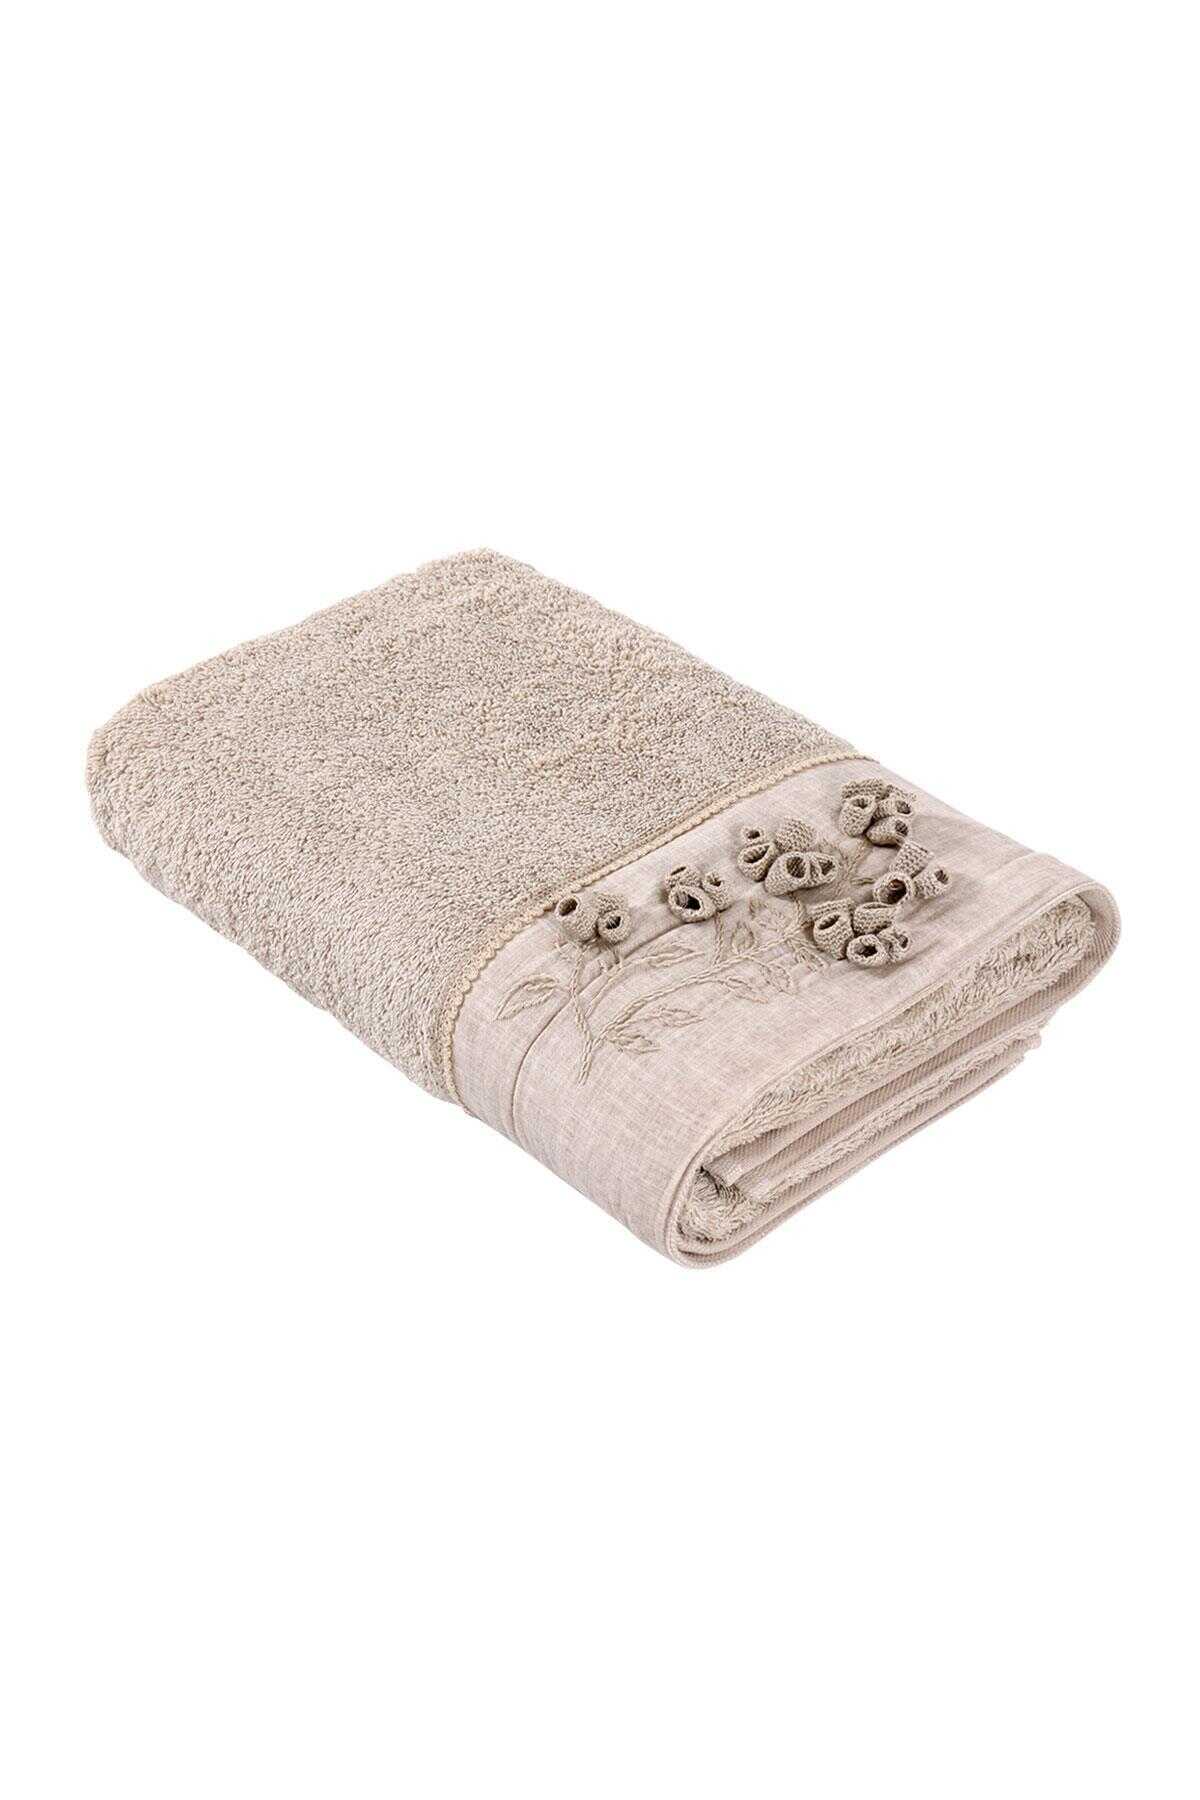 Ecocotton Masal Organic Cotton Woman's Bath Towel 80x150 cm